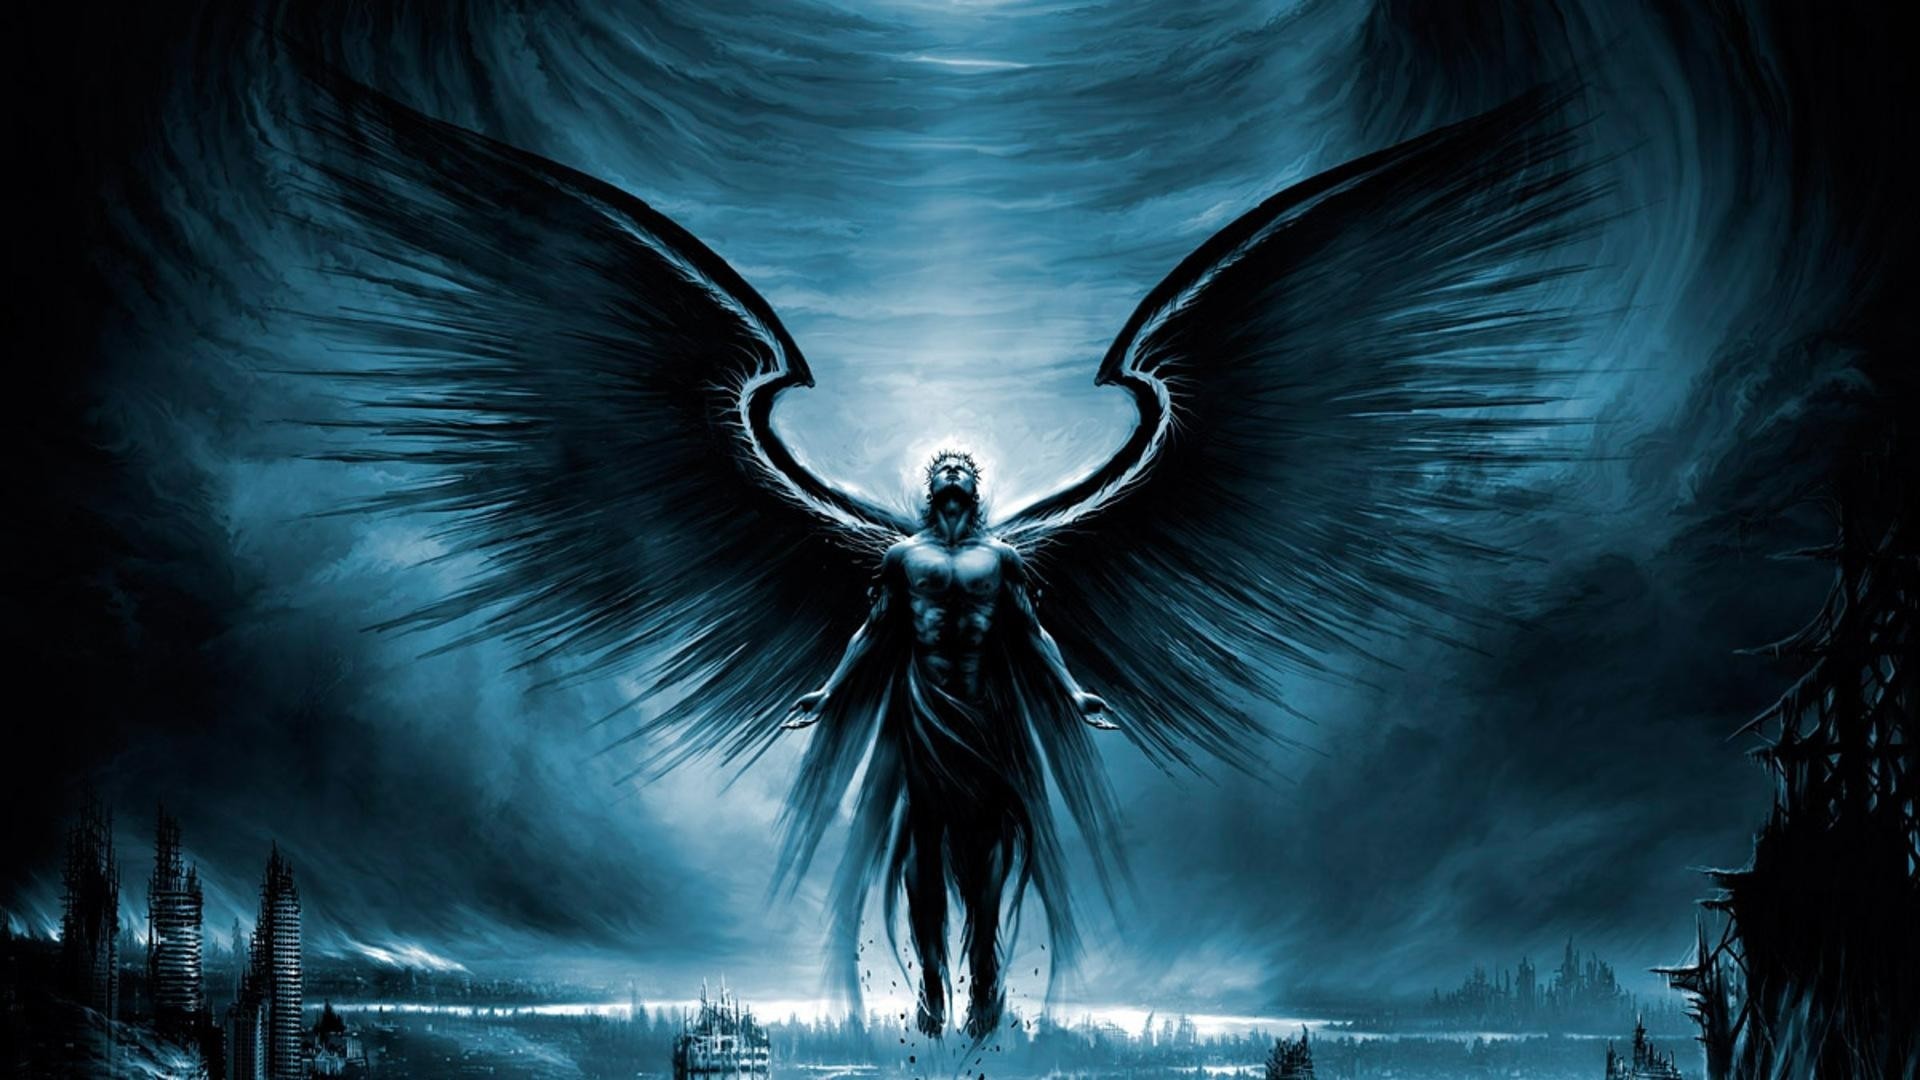 Best Angels And Demons Images On Pinterest Dark Angels 3